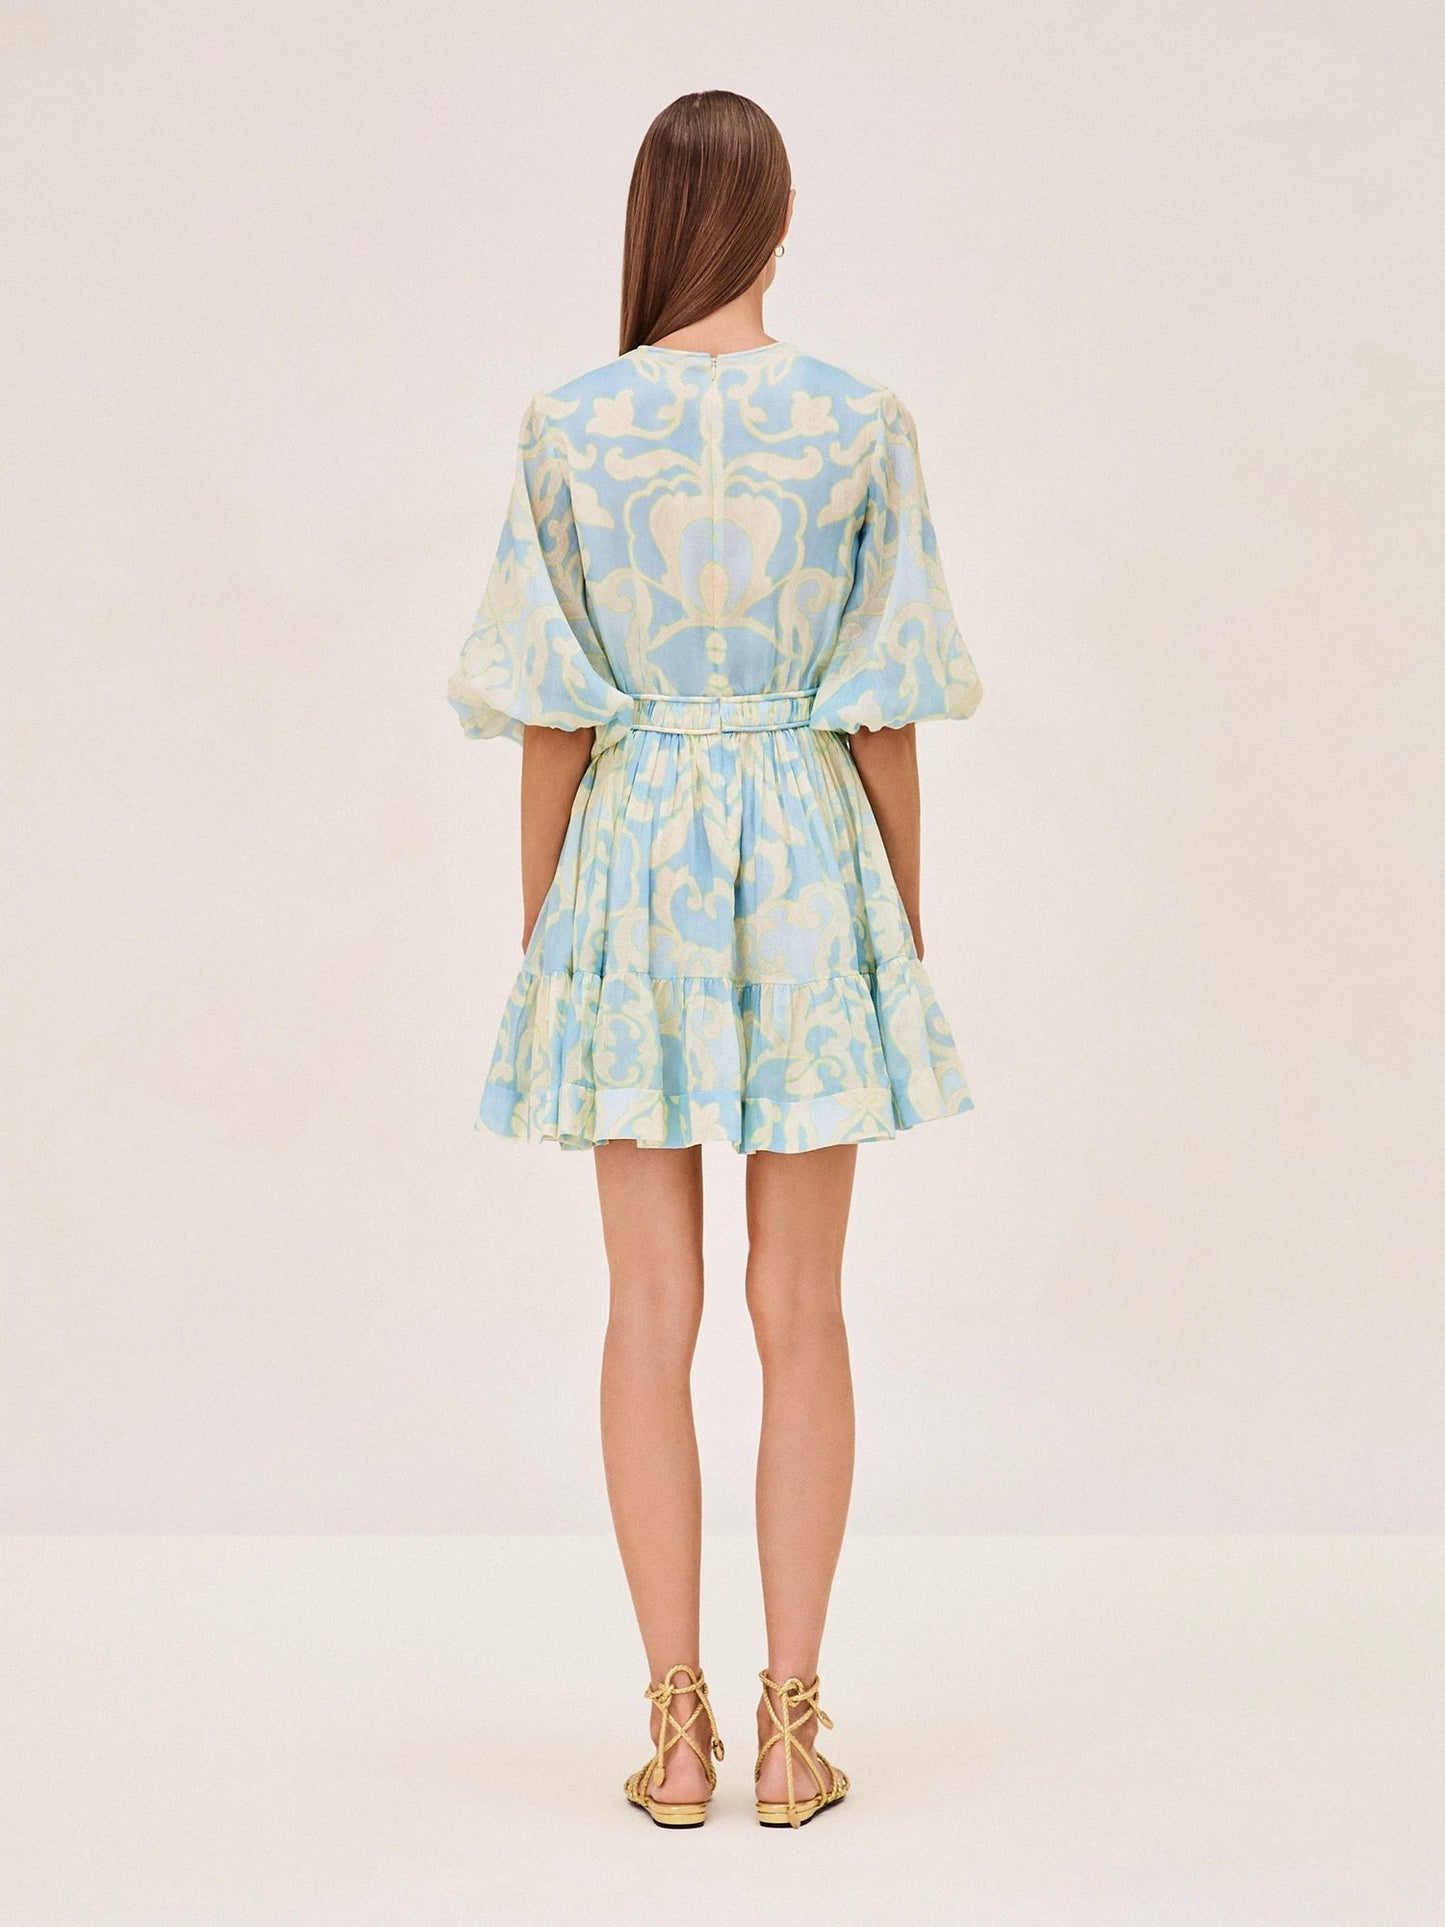 Alexis Capri Dress Printed Mini Dress in Blue Vine